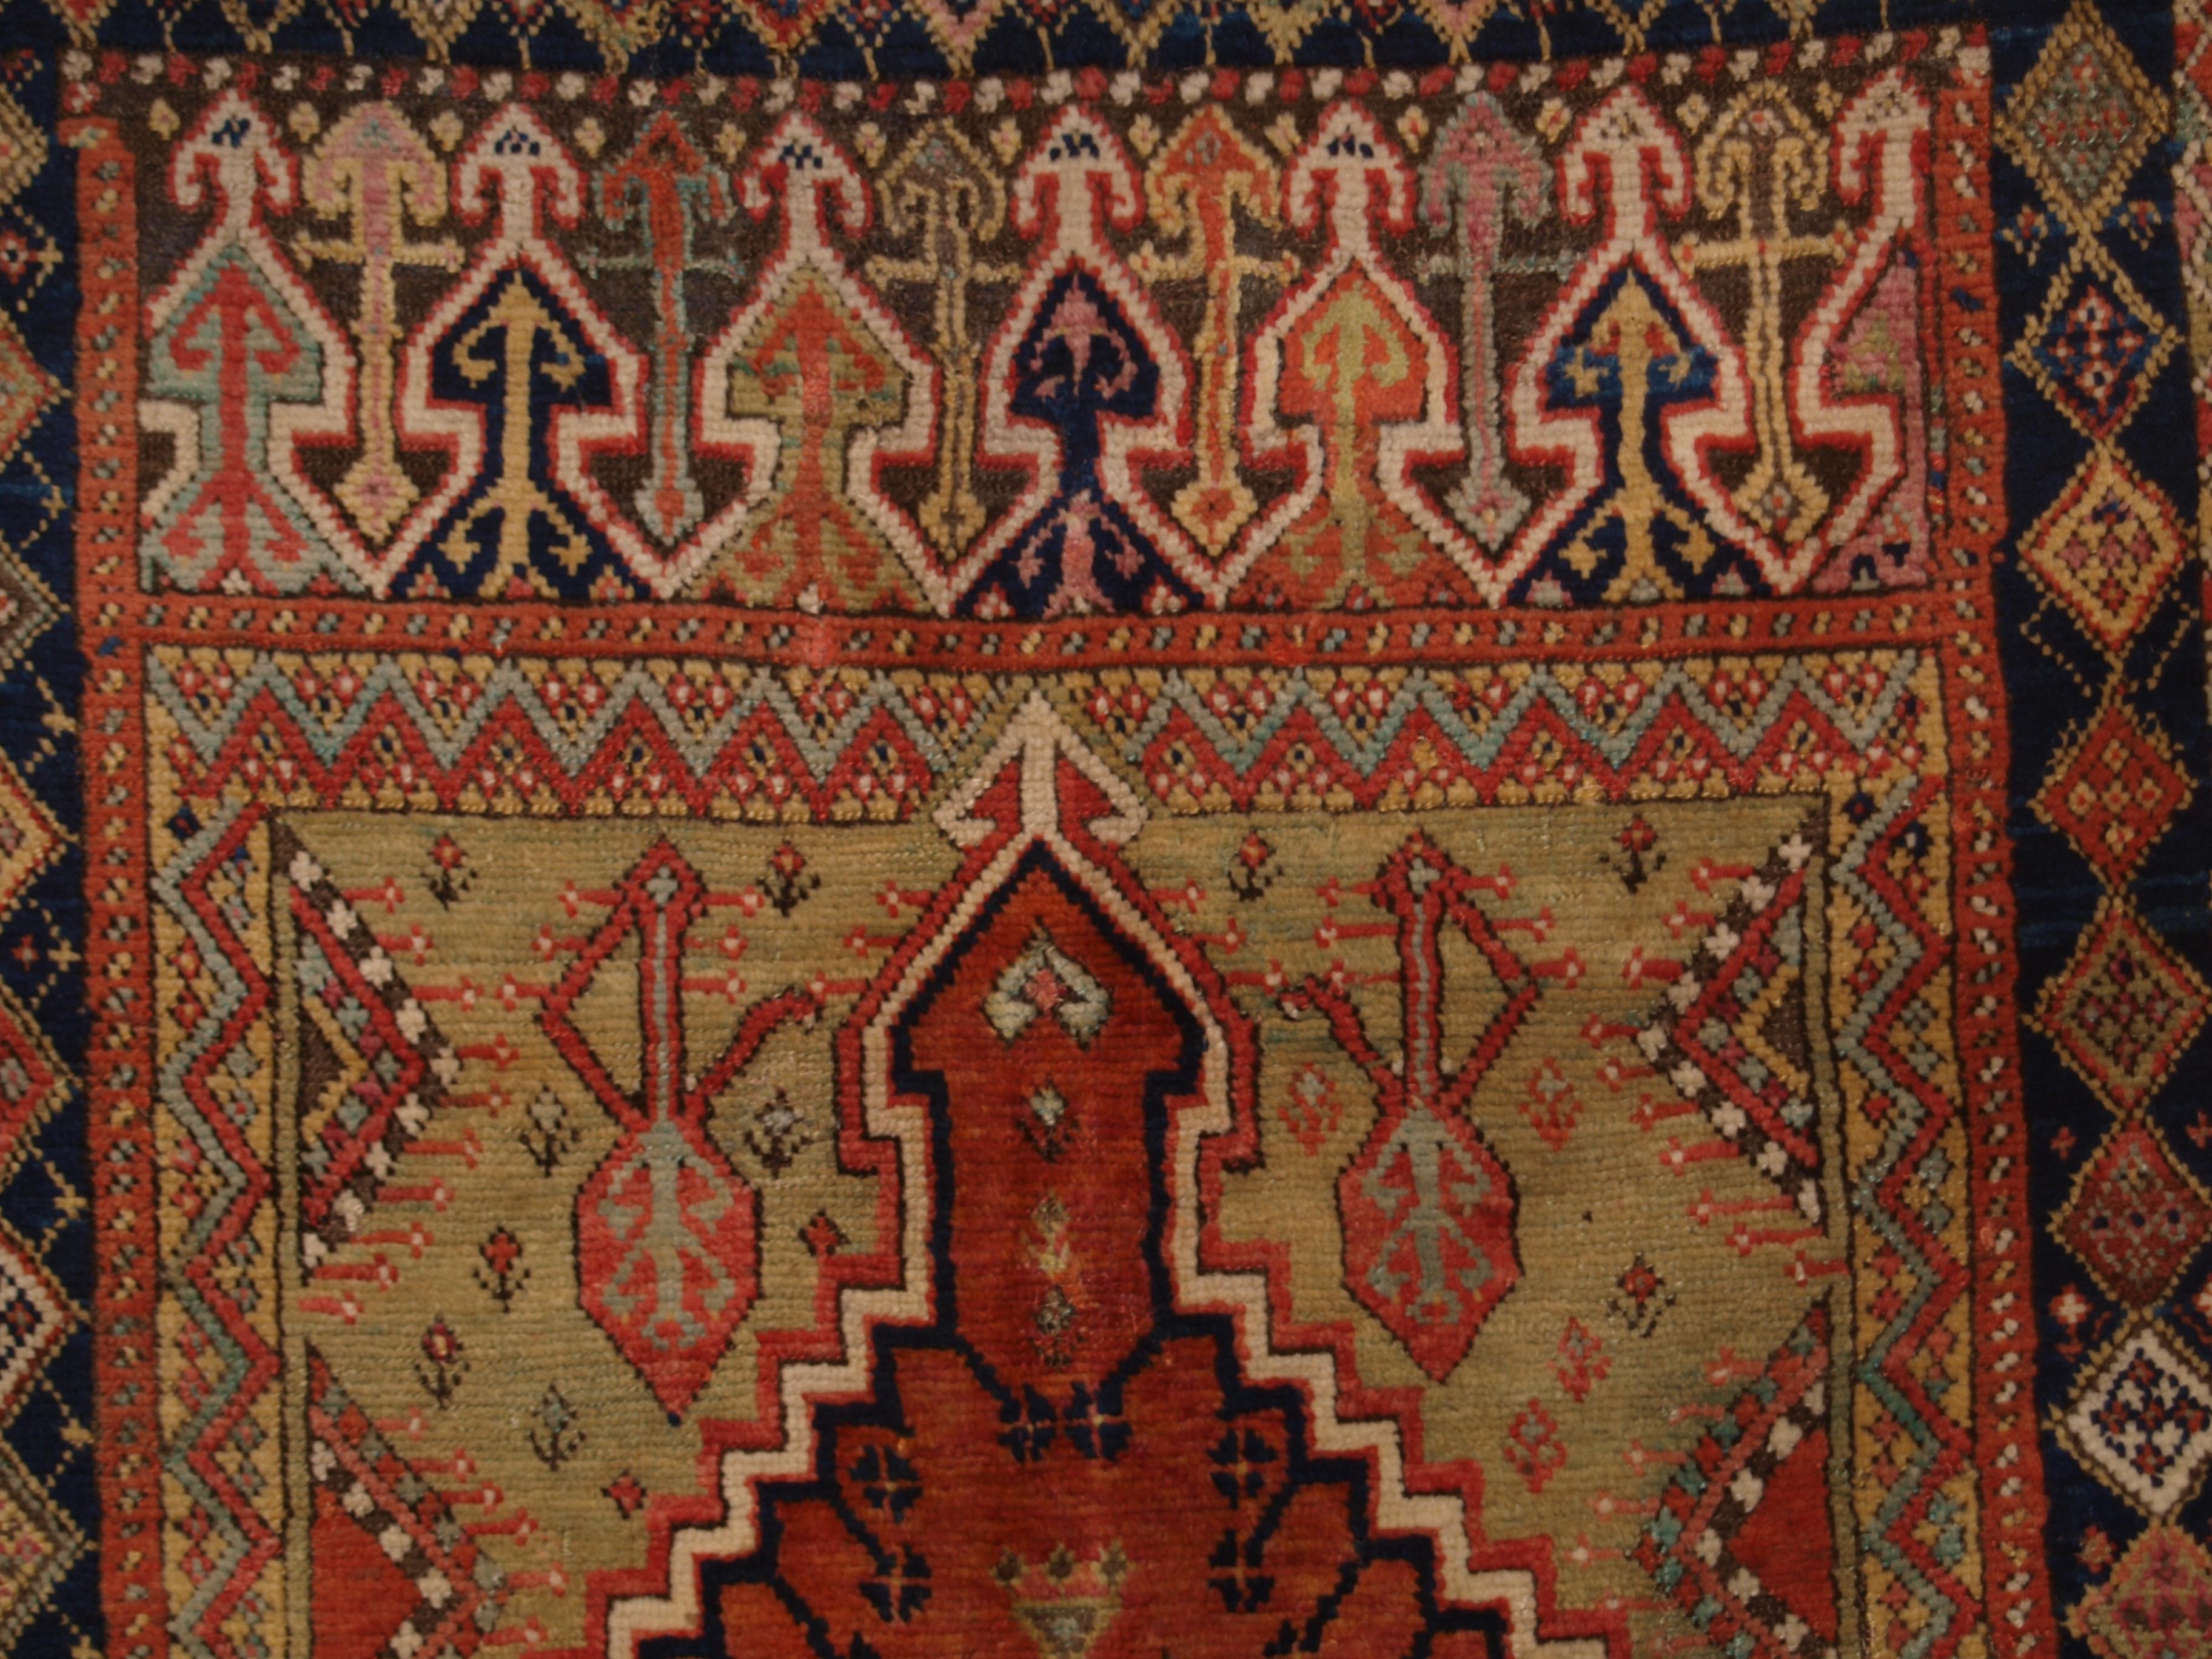 Antique Turkish Mujur Prayer Rug of Classic Design, Mid 19th Century For Sale 3